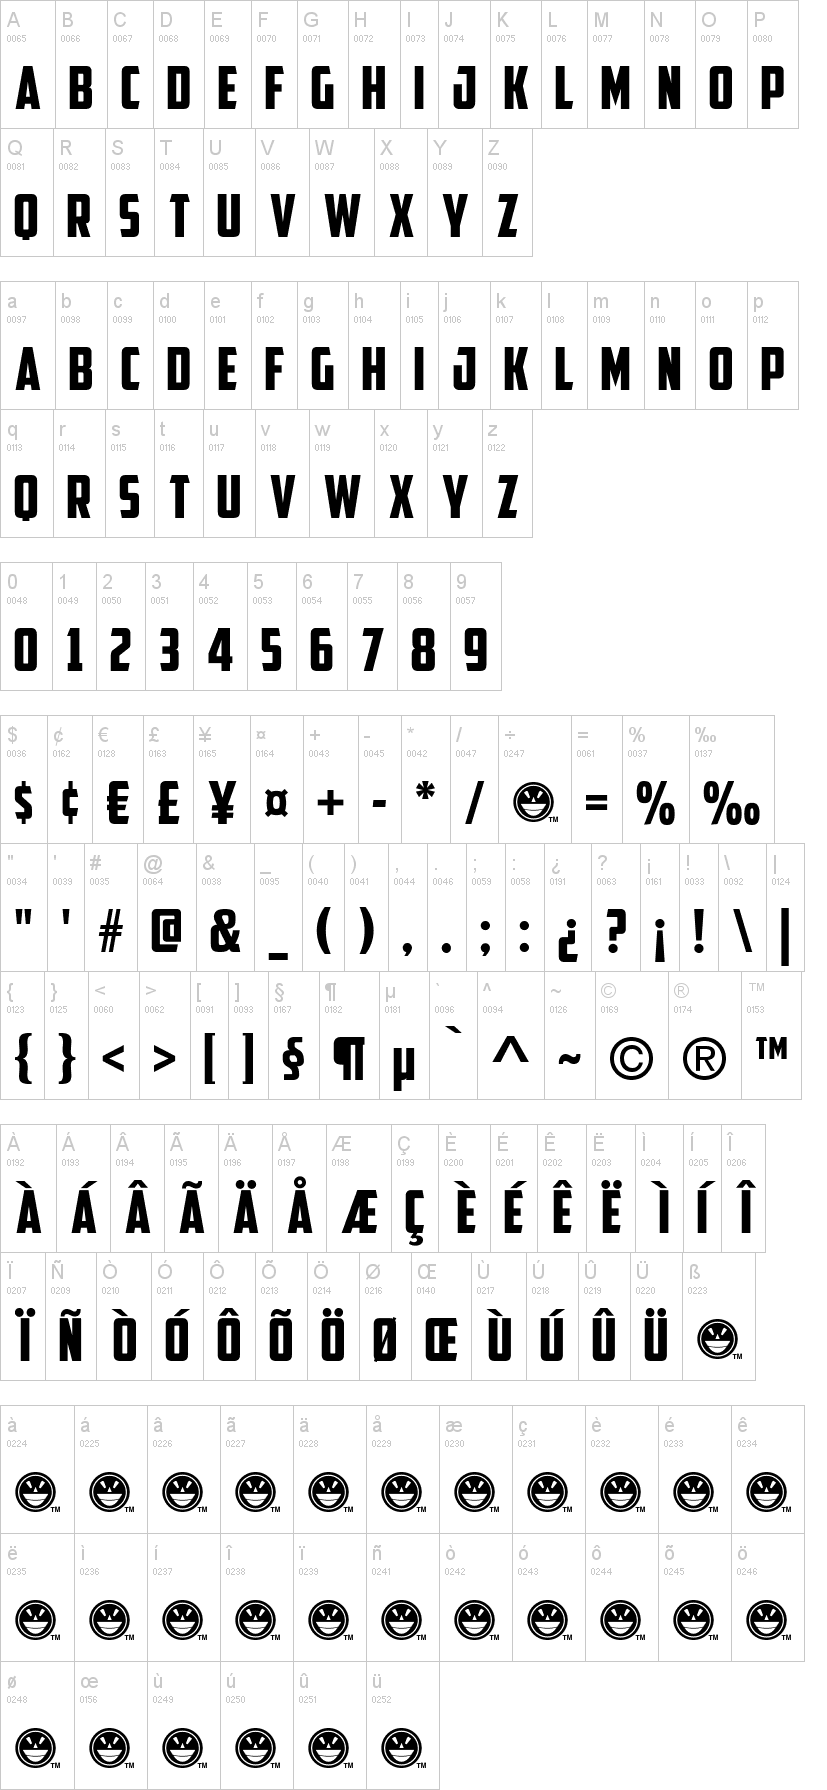 Captain America font alphabet